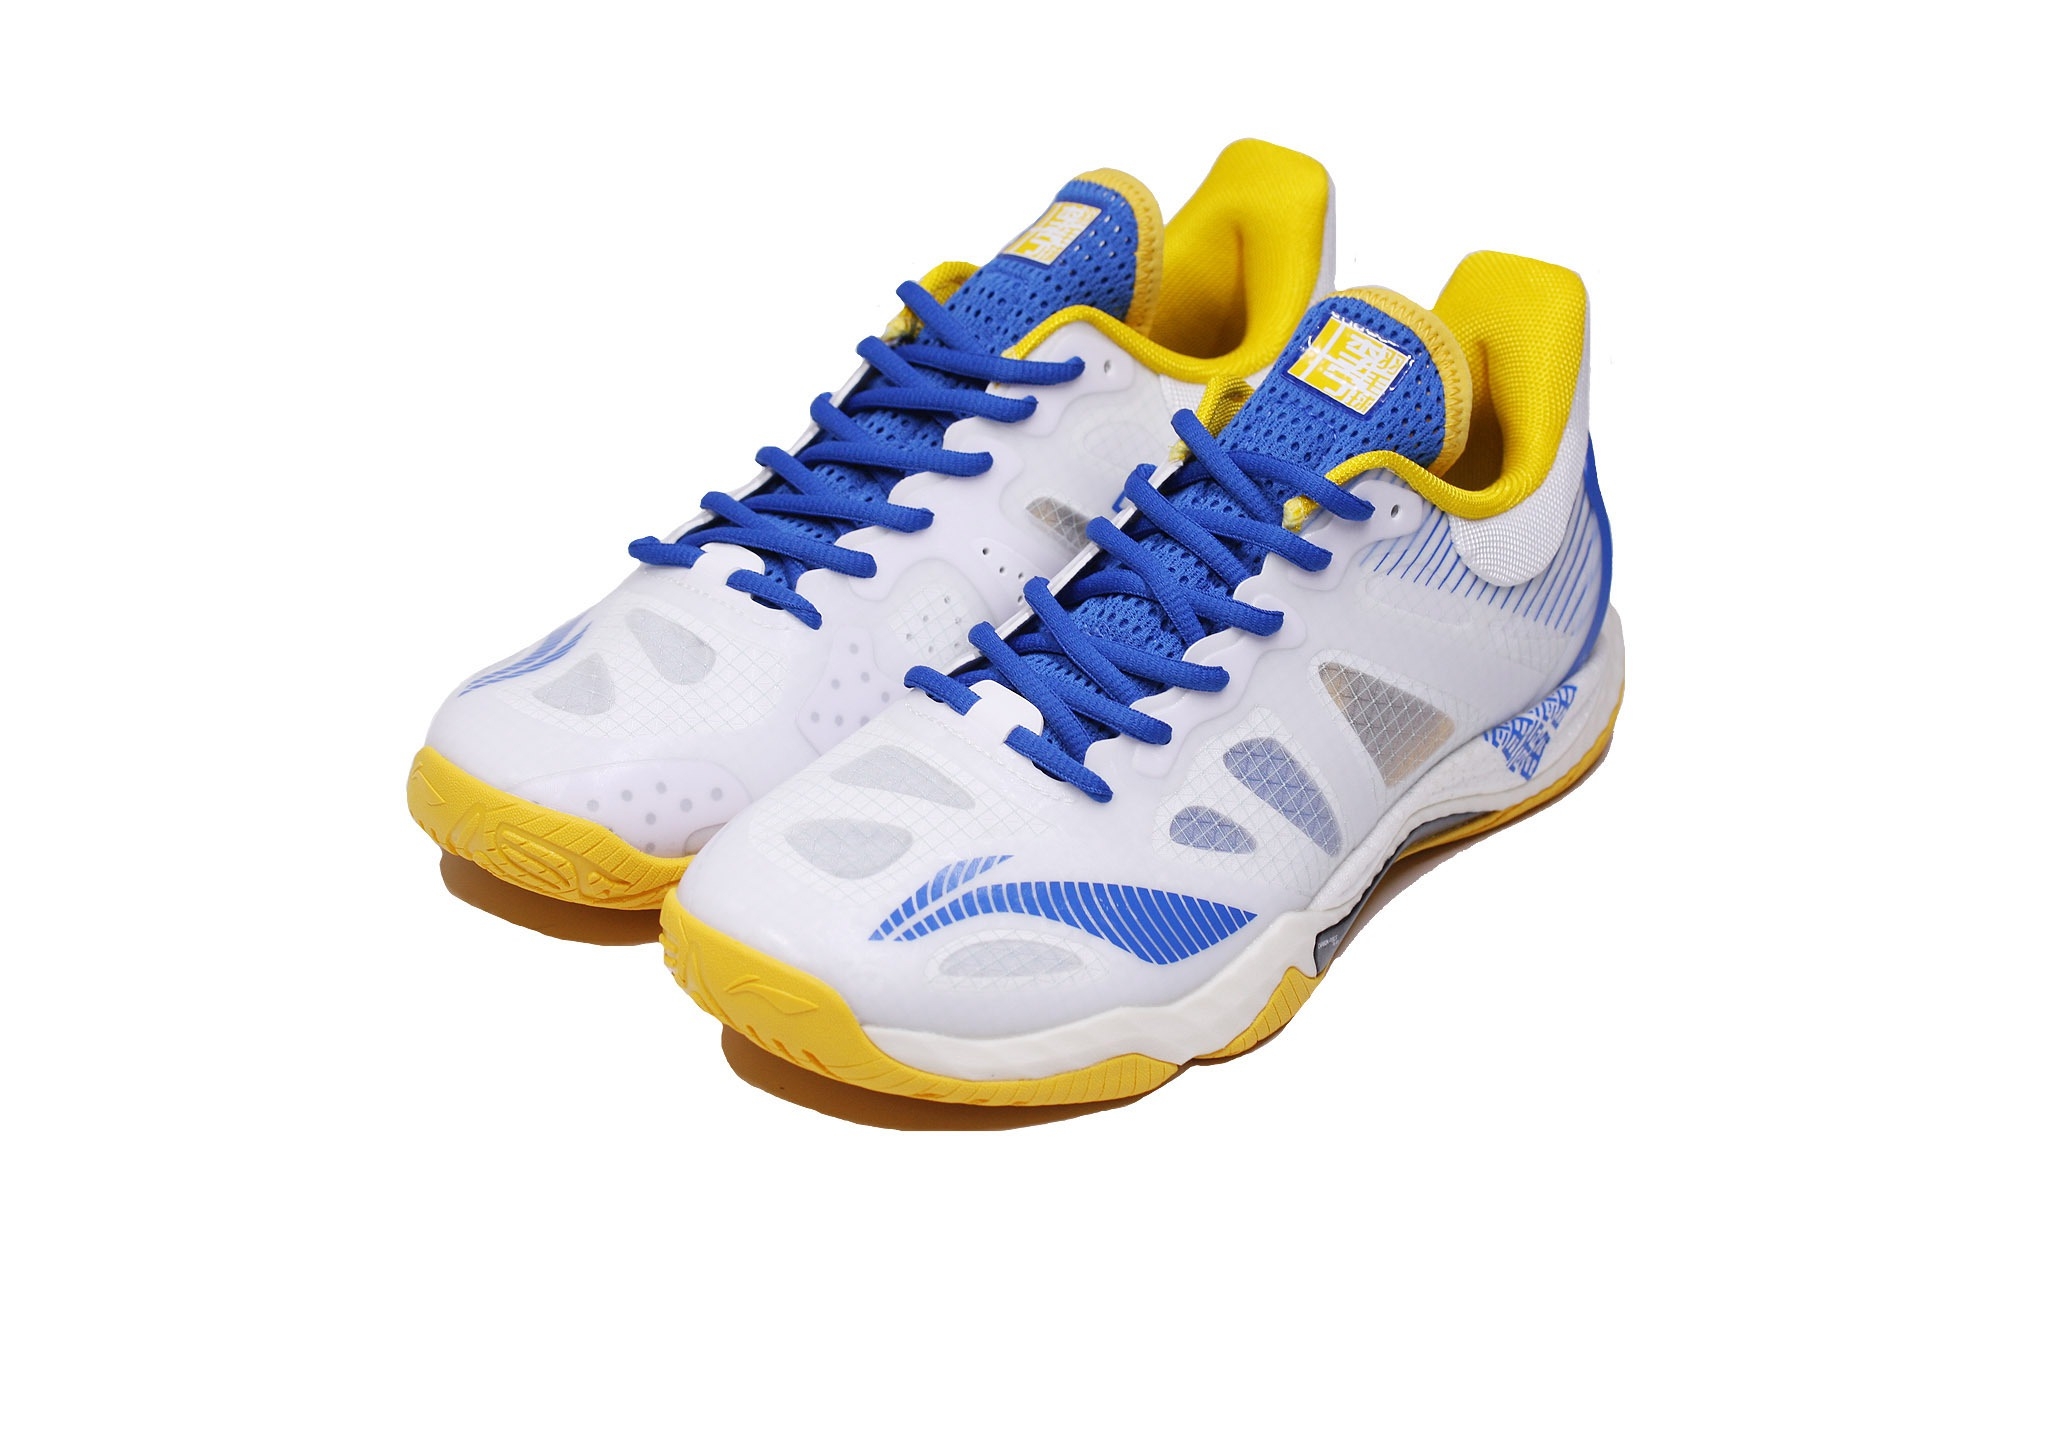 LI-NING รองเท้าแบดมินตัน รุ่น GRYFALCON IV (AYAR001-2S) STD WHITE/PALE BLUE BADMINTON SHOES